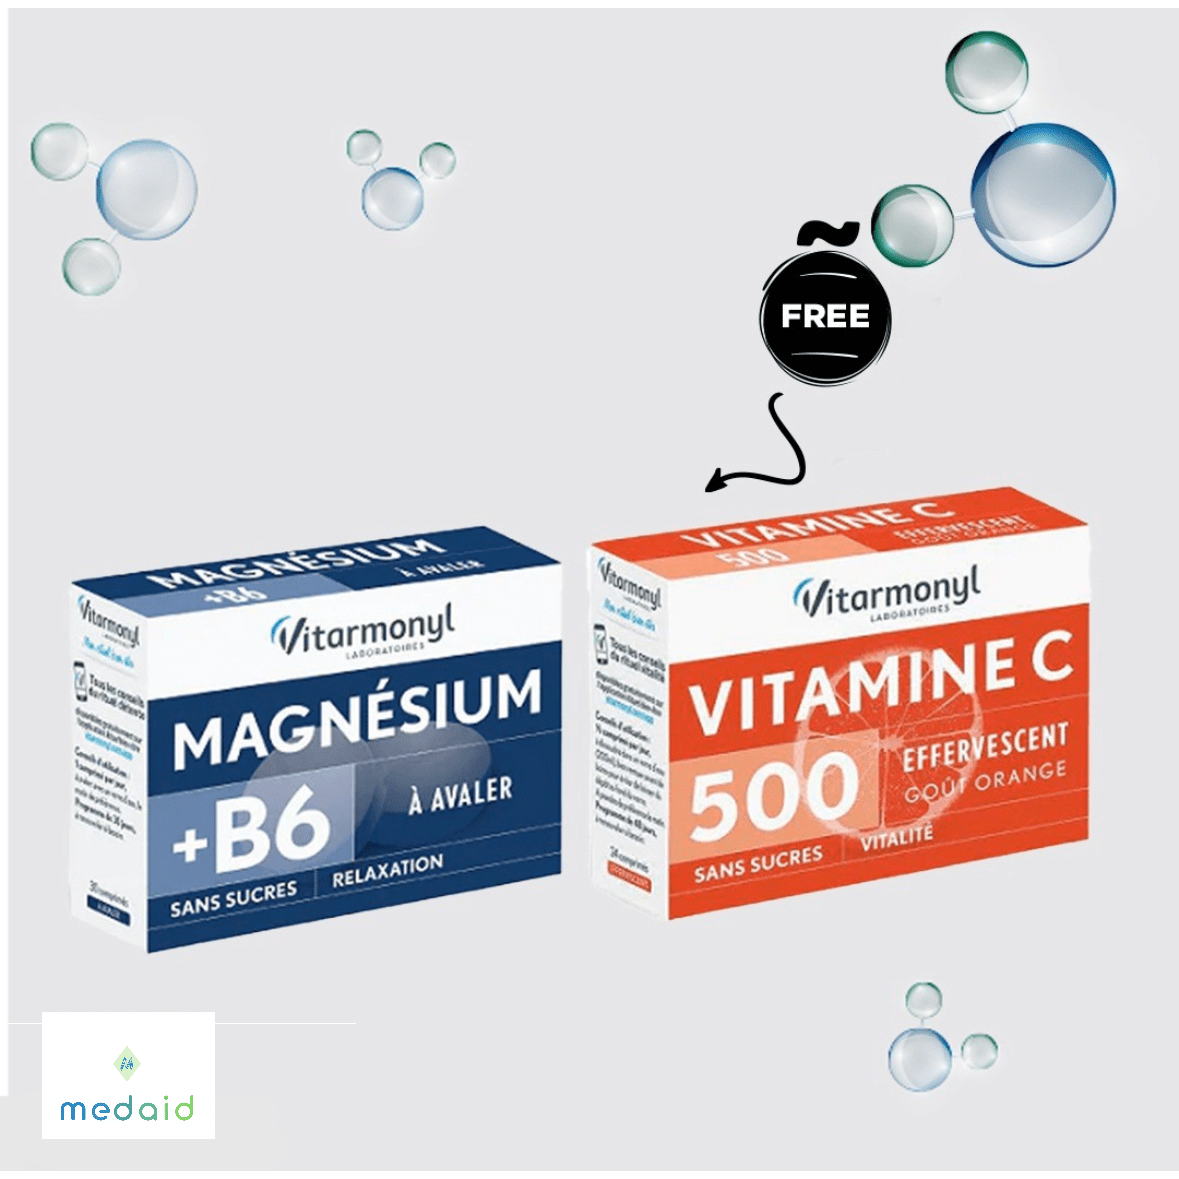 Magnesium B6 + Vitamin C bundle - Medaid - Lebanon